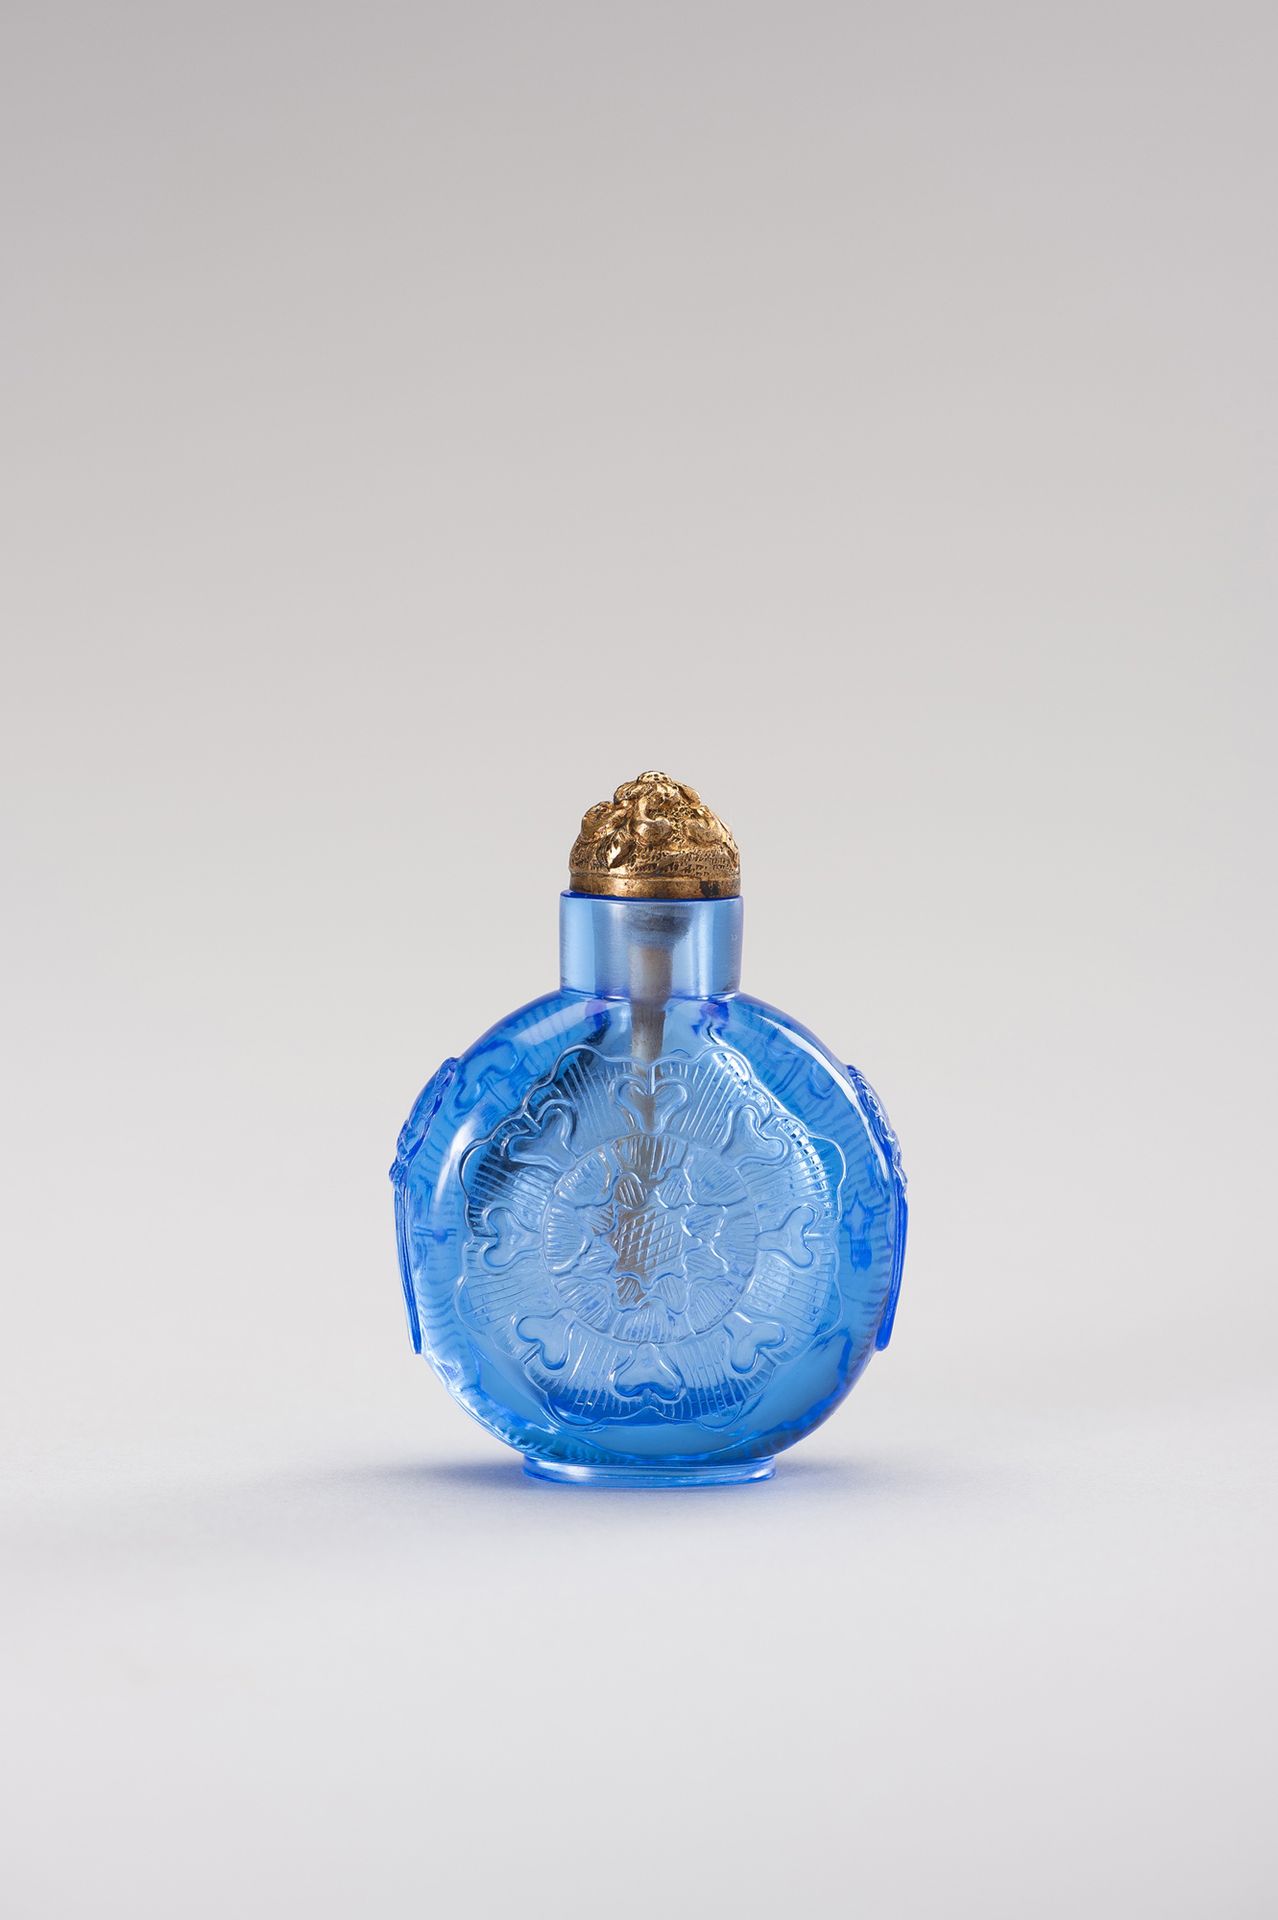 A TRANSPARENT BLUE GLASS SNUFF BOTTLE TRANSPARENTE BLAUE GLASFLASCHE
China, Qing&hellip;